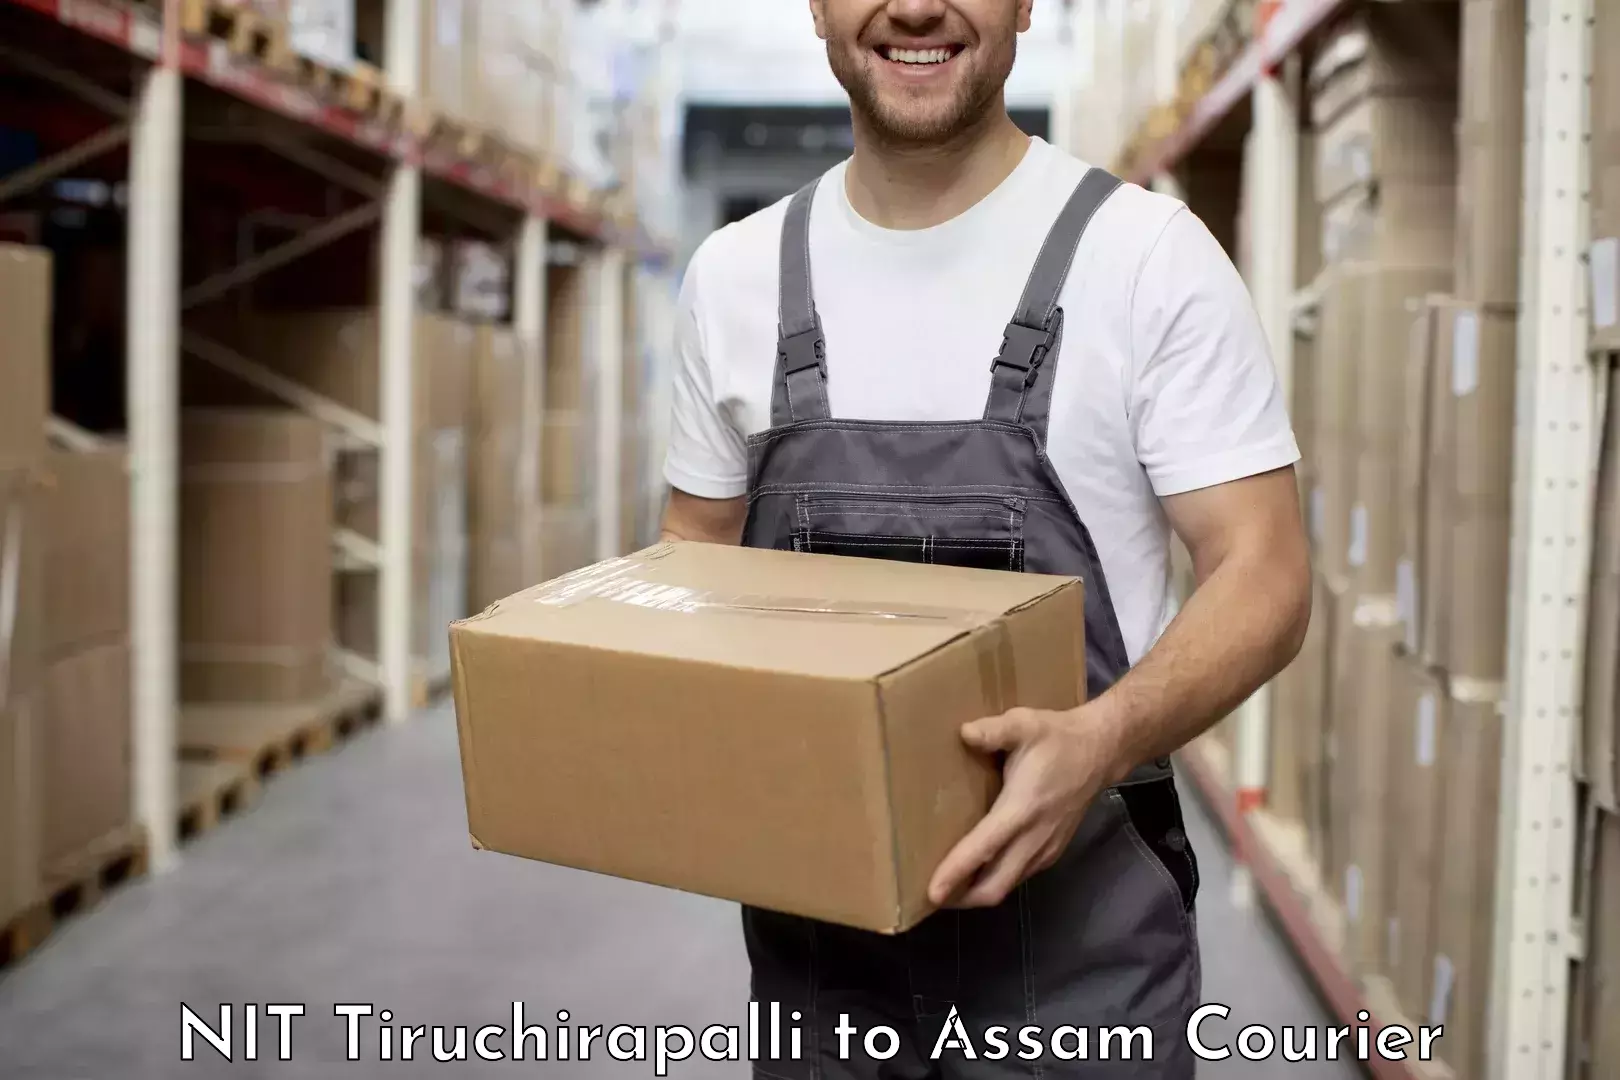 Professional courier handling NIT Tiruchirapalli to Assam